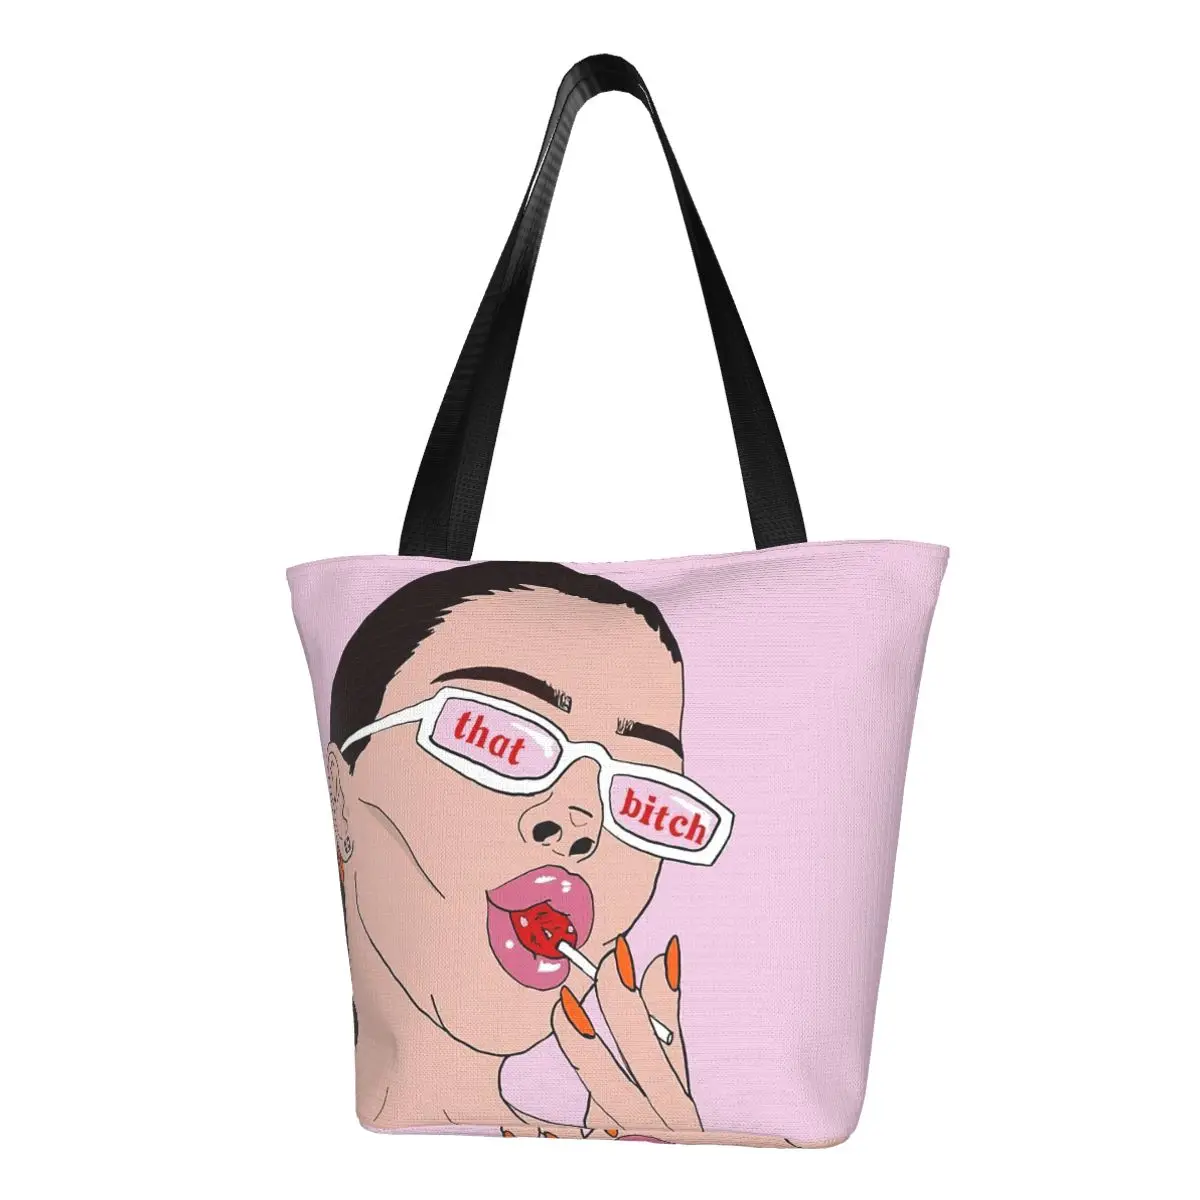 Kaylie Cardashian Polyester outdoor girl handbag, woman shopping bag, shoulder bag, canvas bag, gift bag